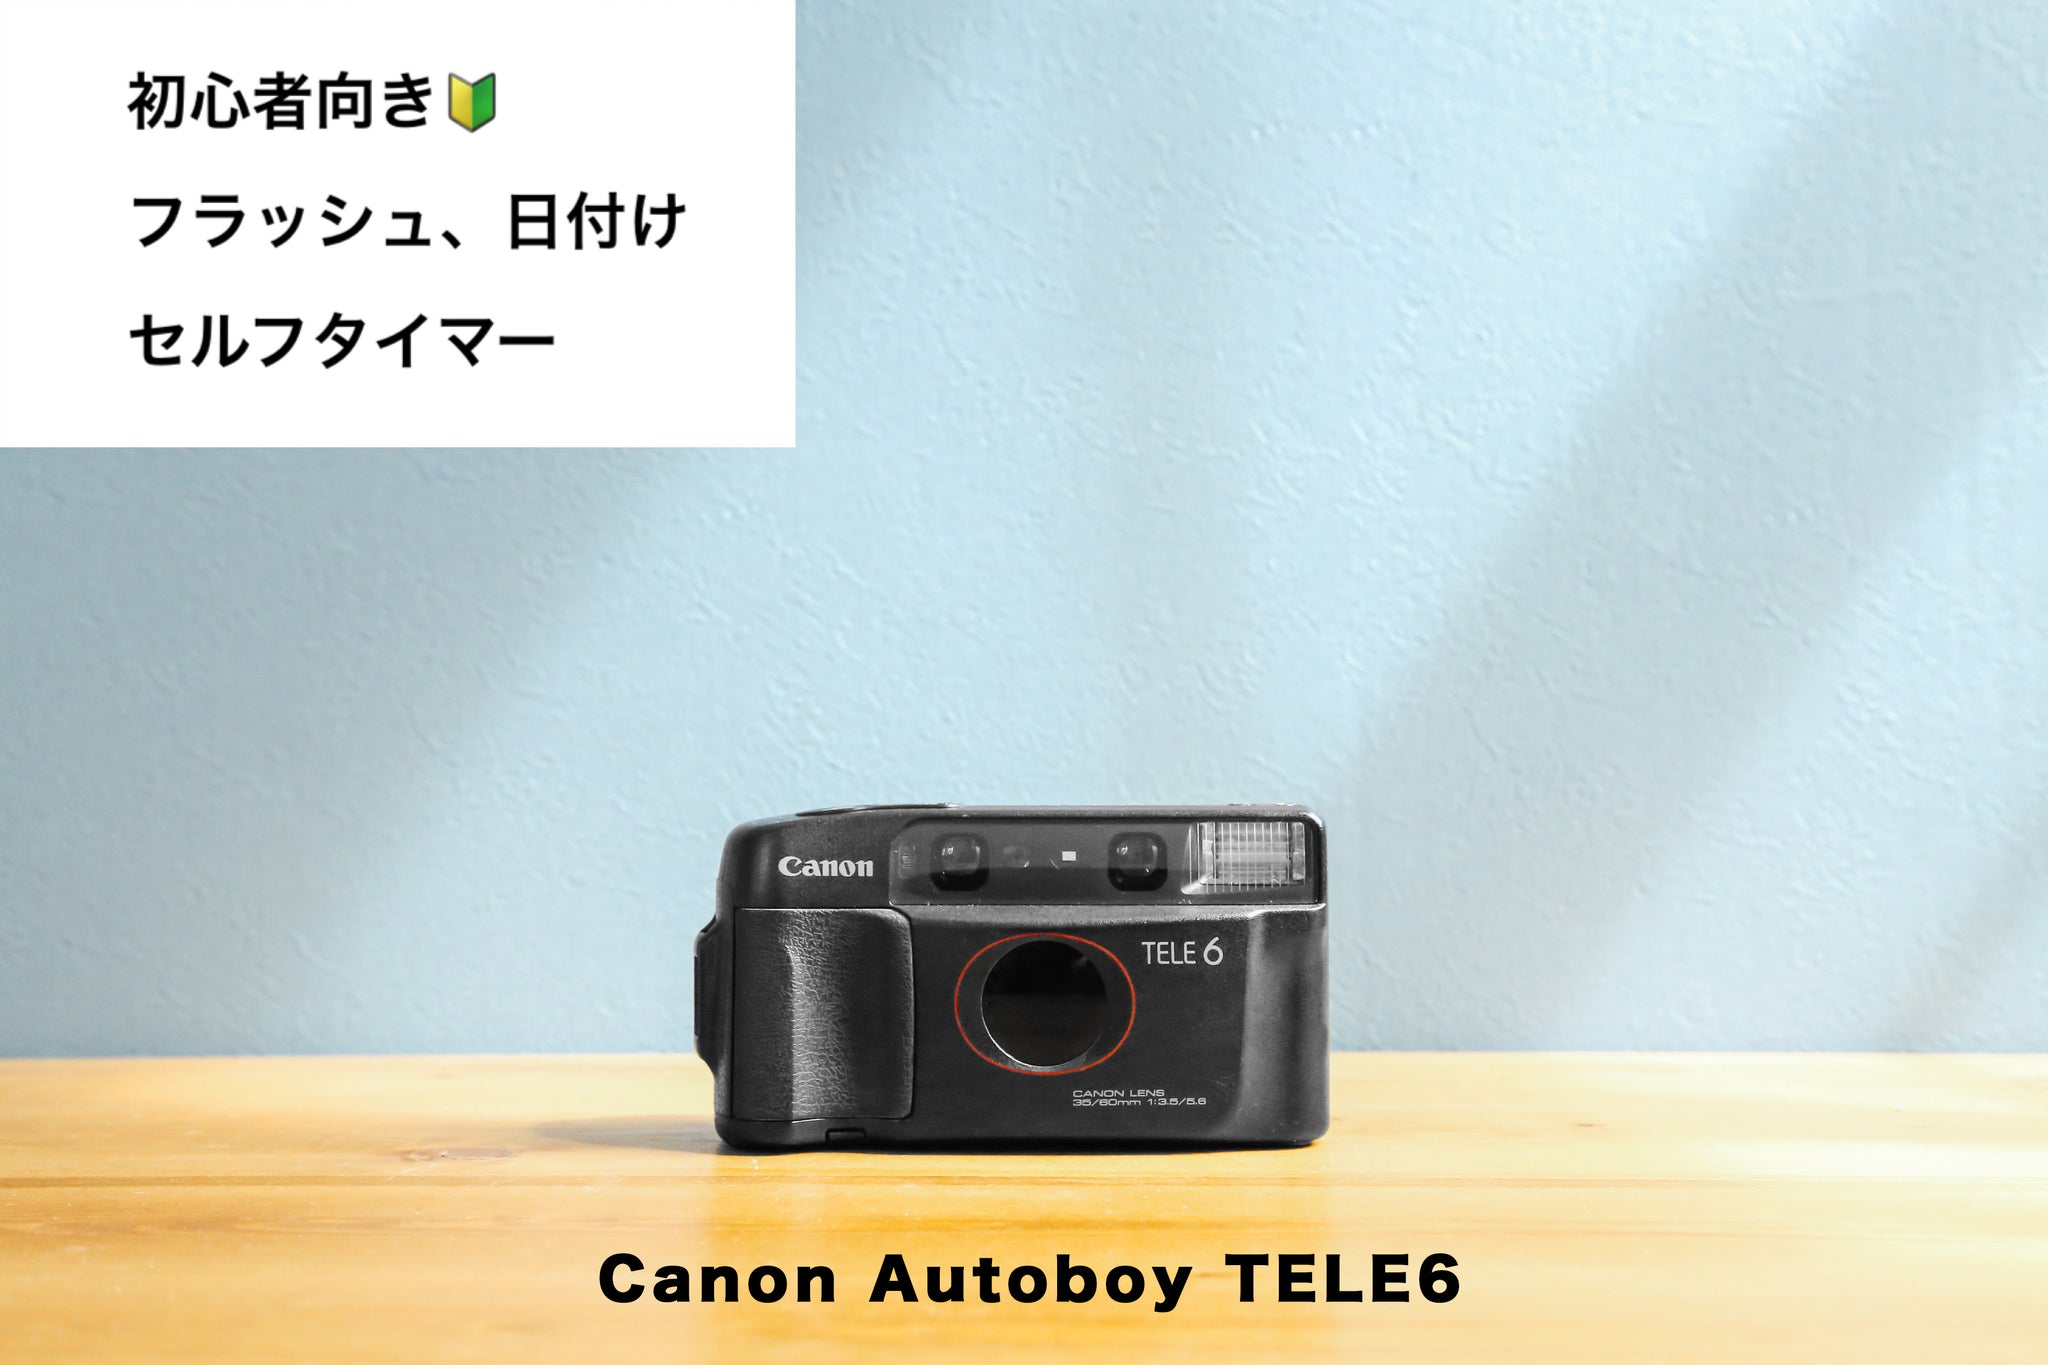 Canon Autoboy TELE6